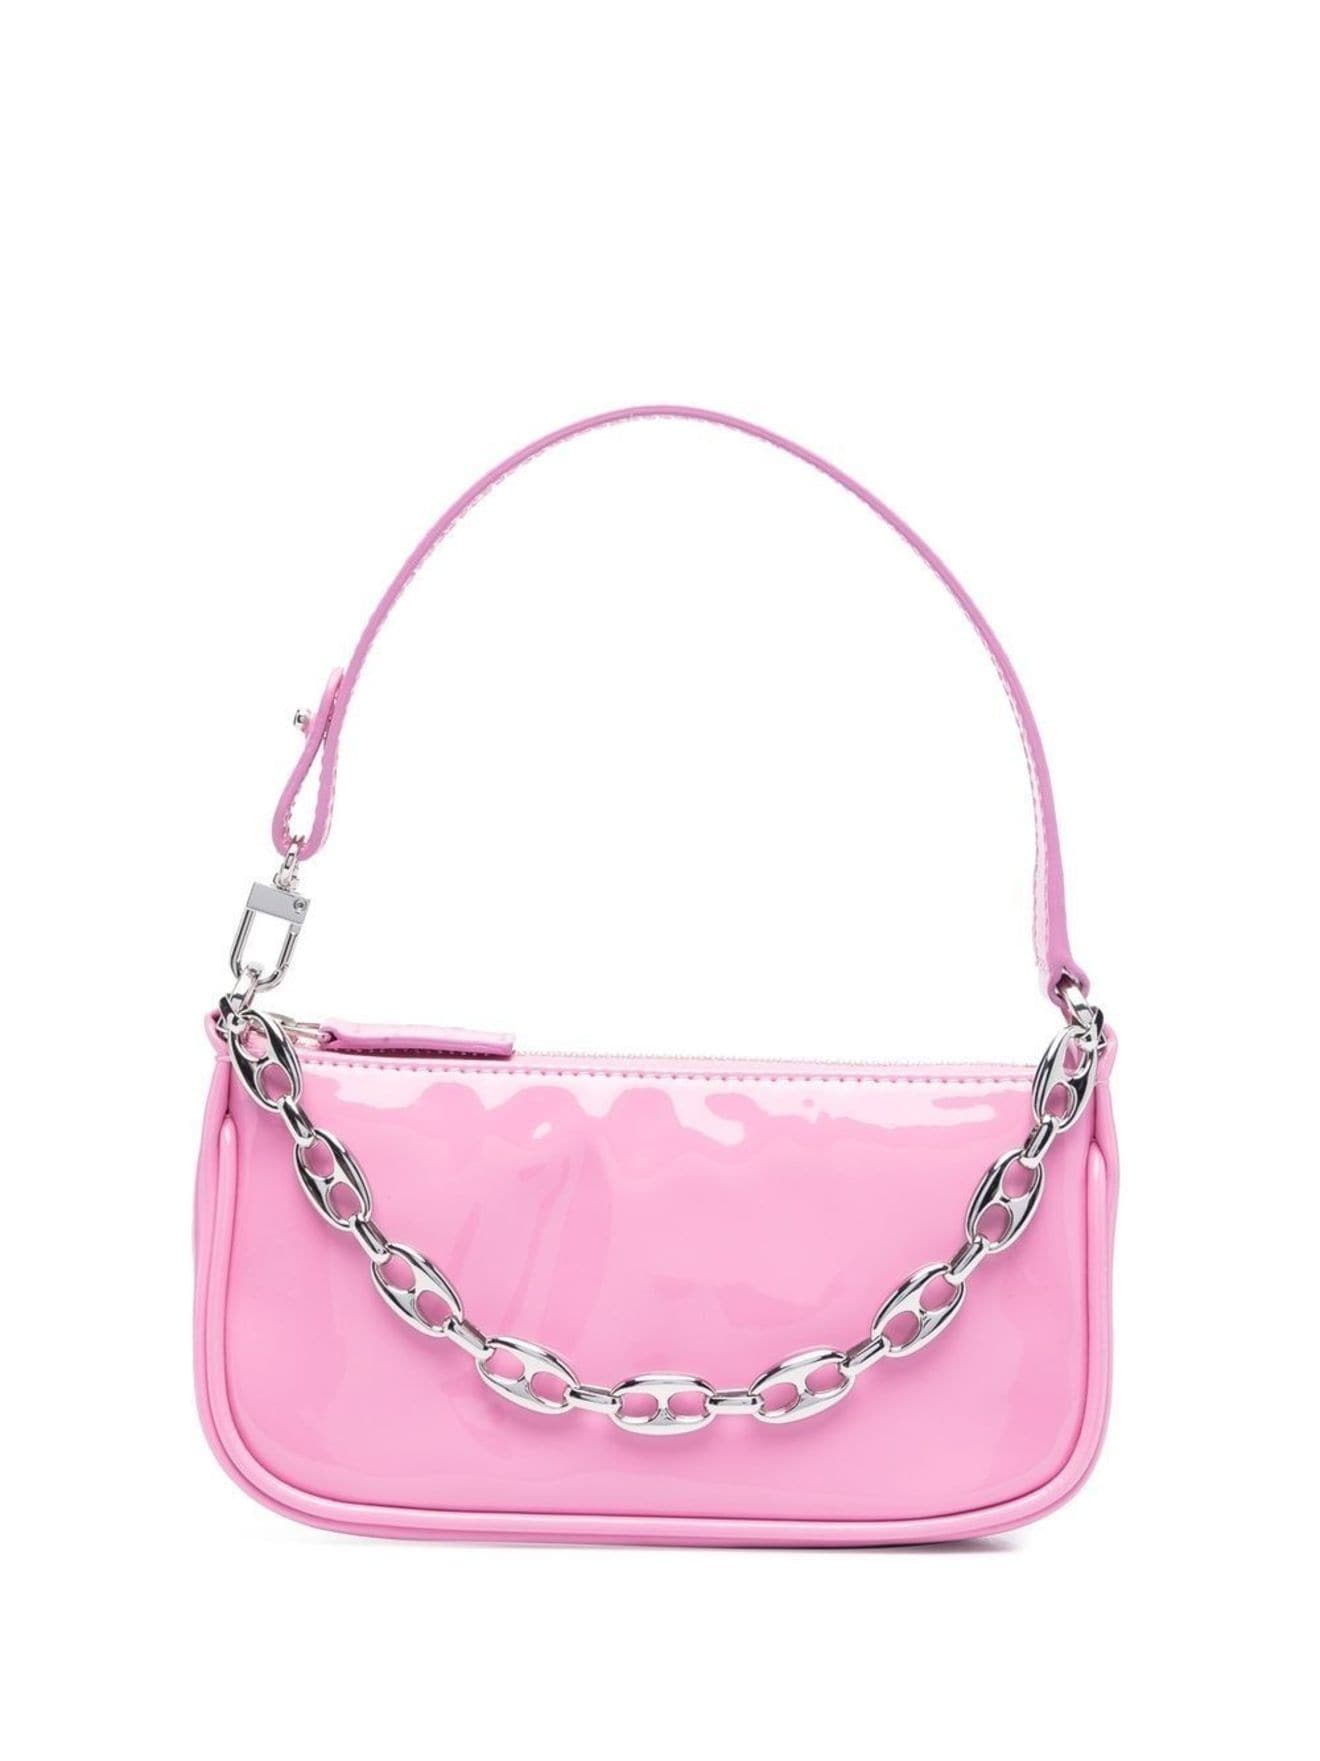 BY FAR mini Rachel bag pink | MODES